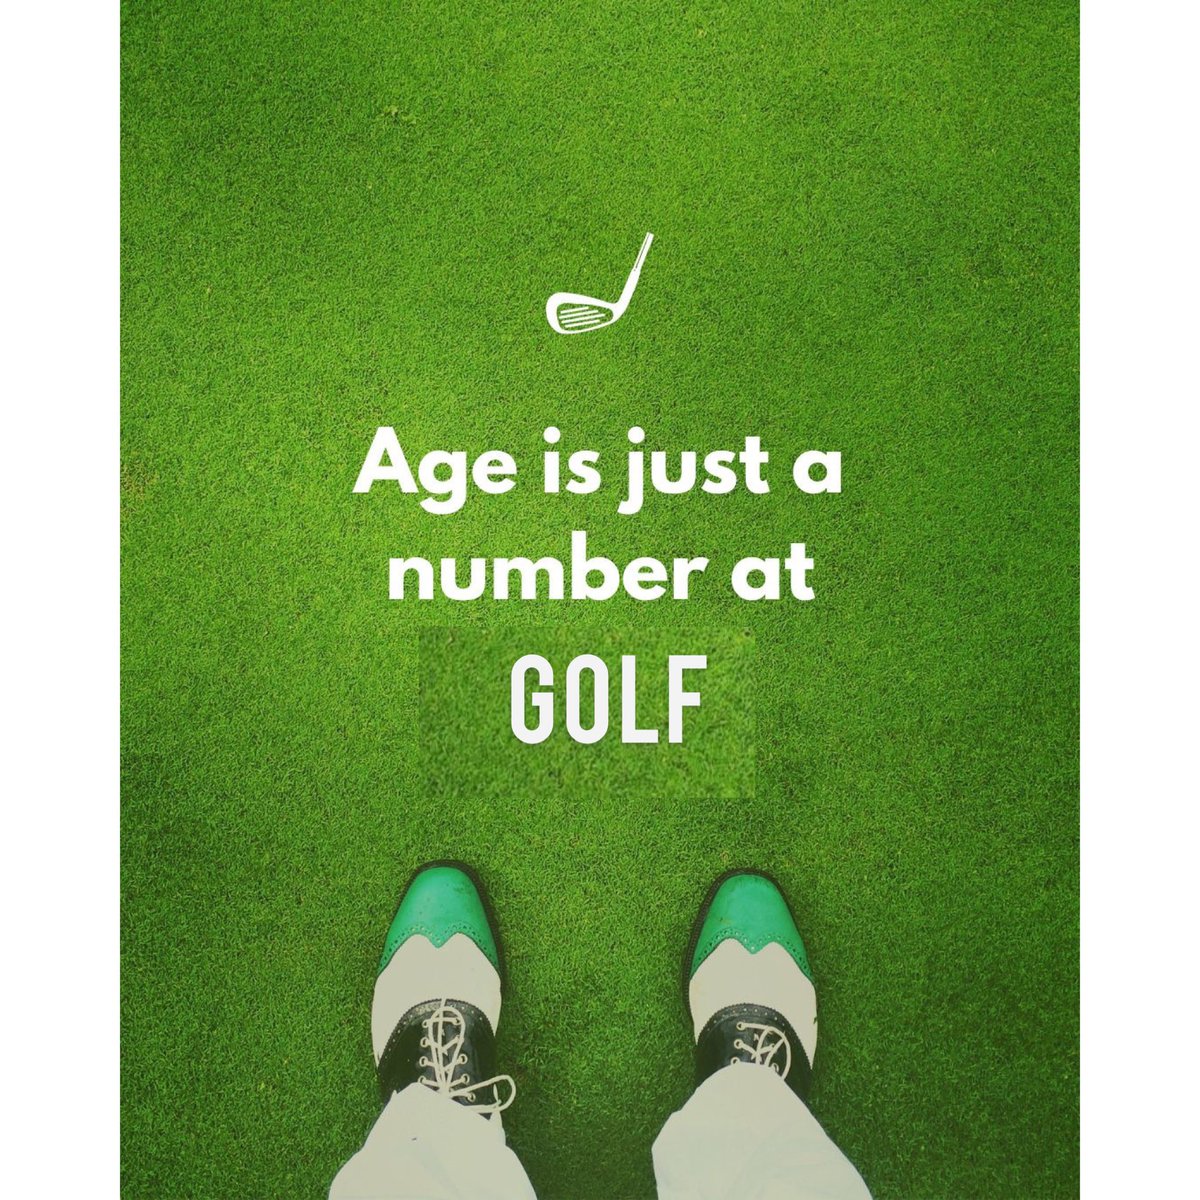 Age is just a number at golf🏌️‍♀️
#golfergirl #fitgirl  #borntoplaygolf #callawaygolf #callawayapparel #callawaycustoms  #golfplayer #golfislove #jaininfopath #jaininfopathdurg #shikshajainjaipur #golfmeme #golferofinstagram #golferofindia #golfecourse #india #jaininfopath